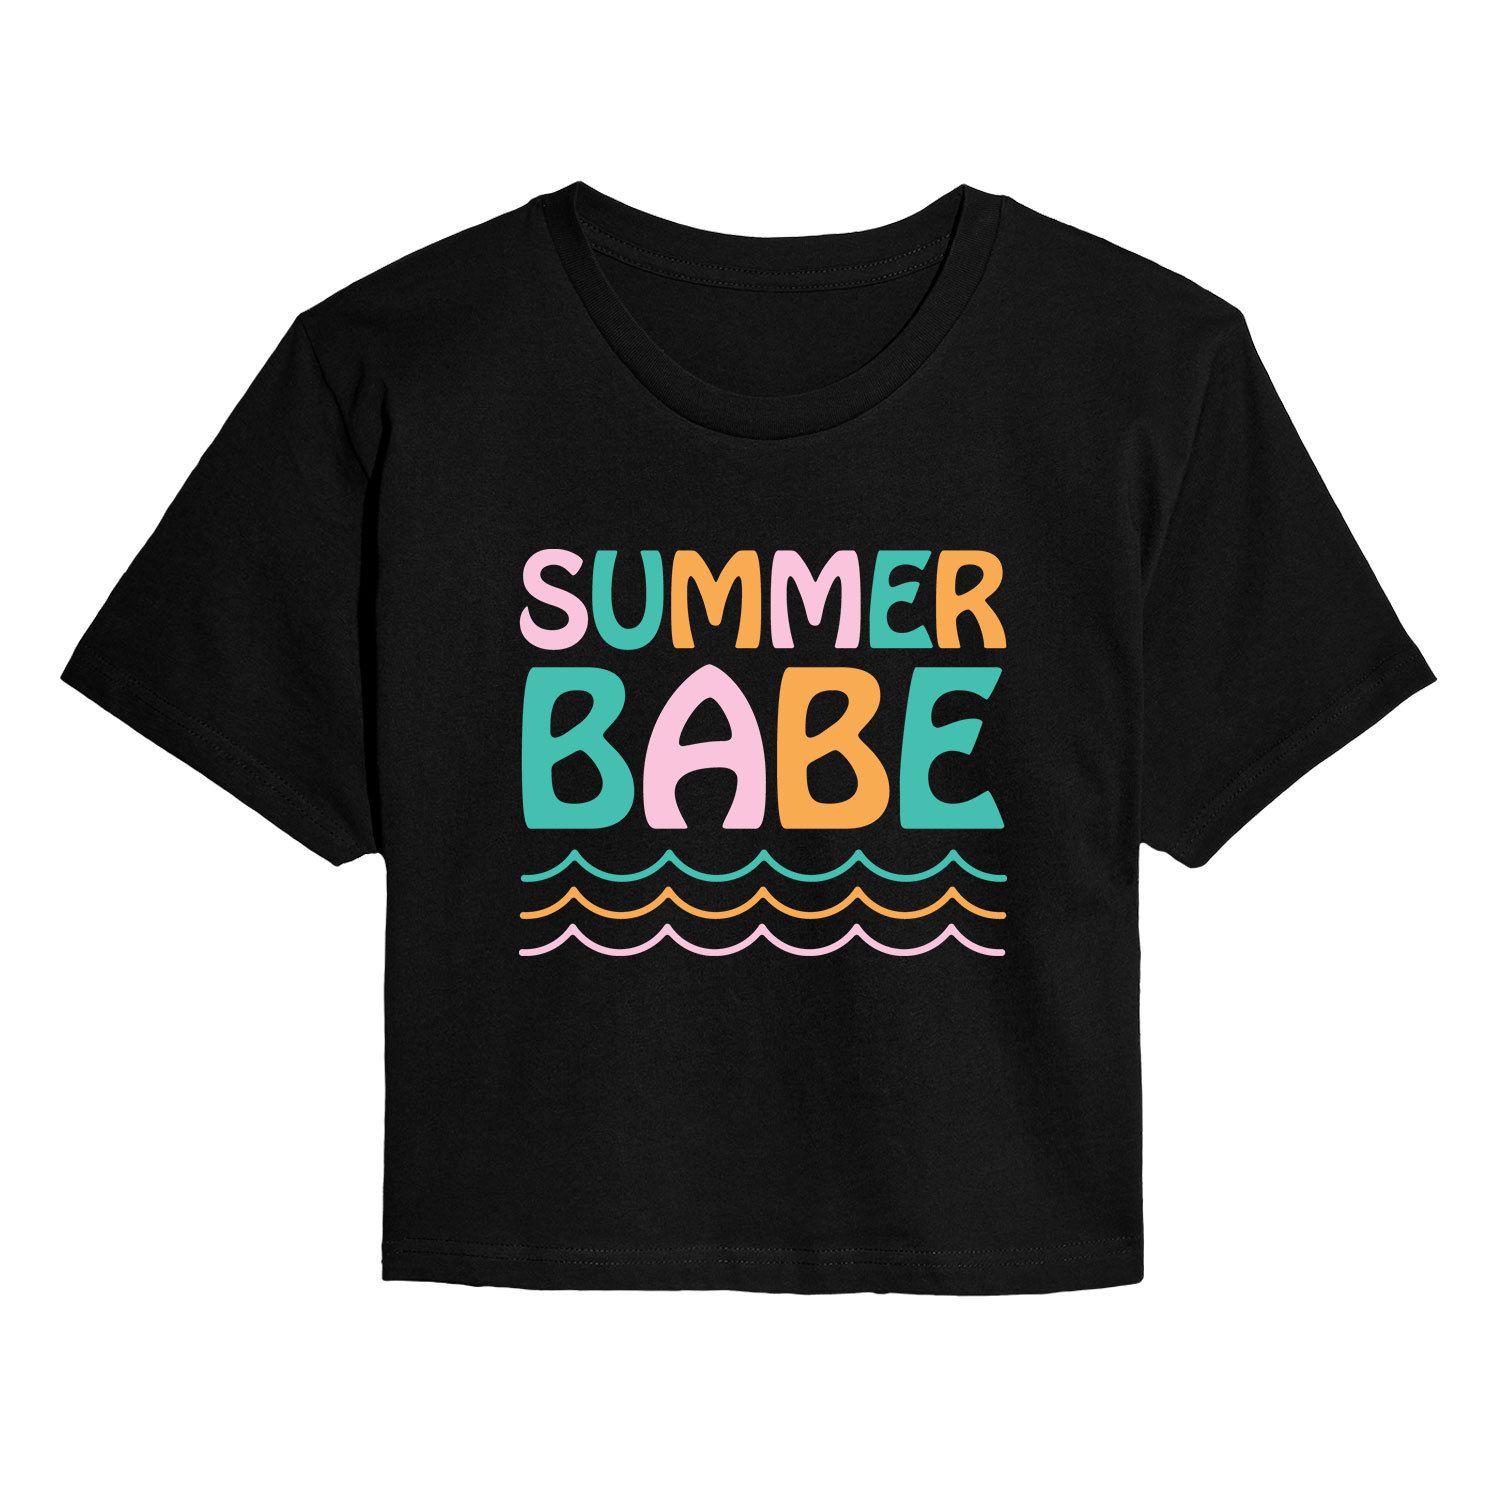 укороченная футболка с надписью fashion babe Укороченная футболка с рисунком Summer Babe для юниоров Licensed Character